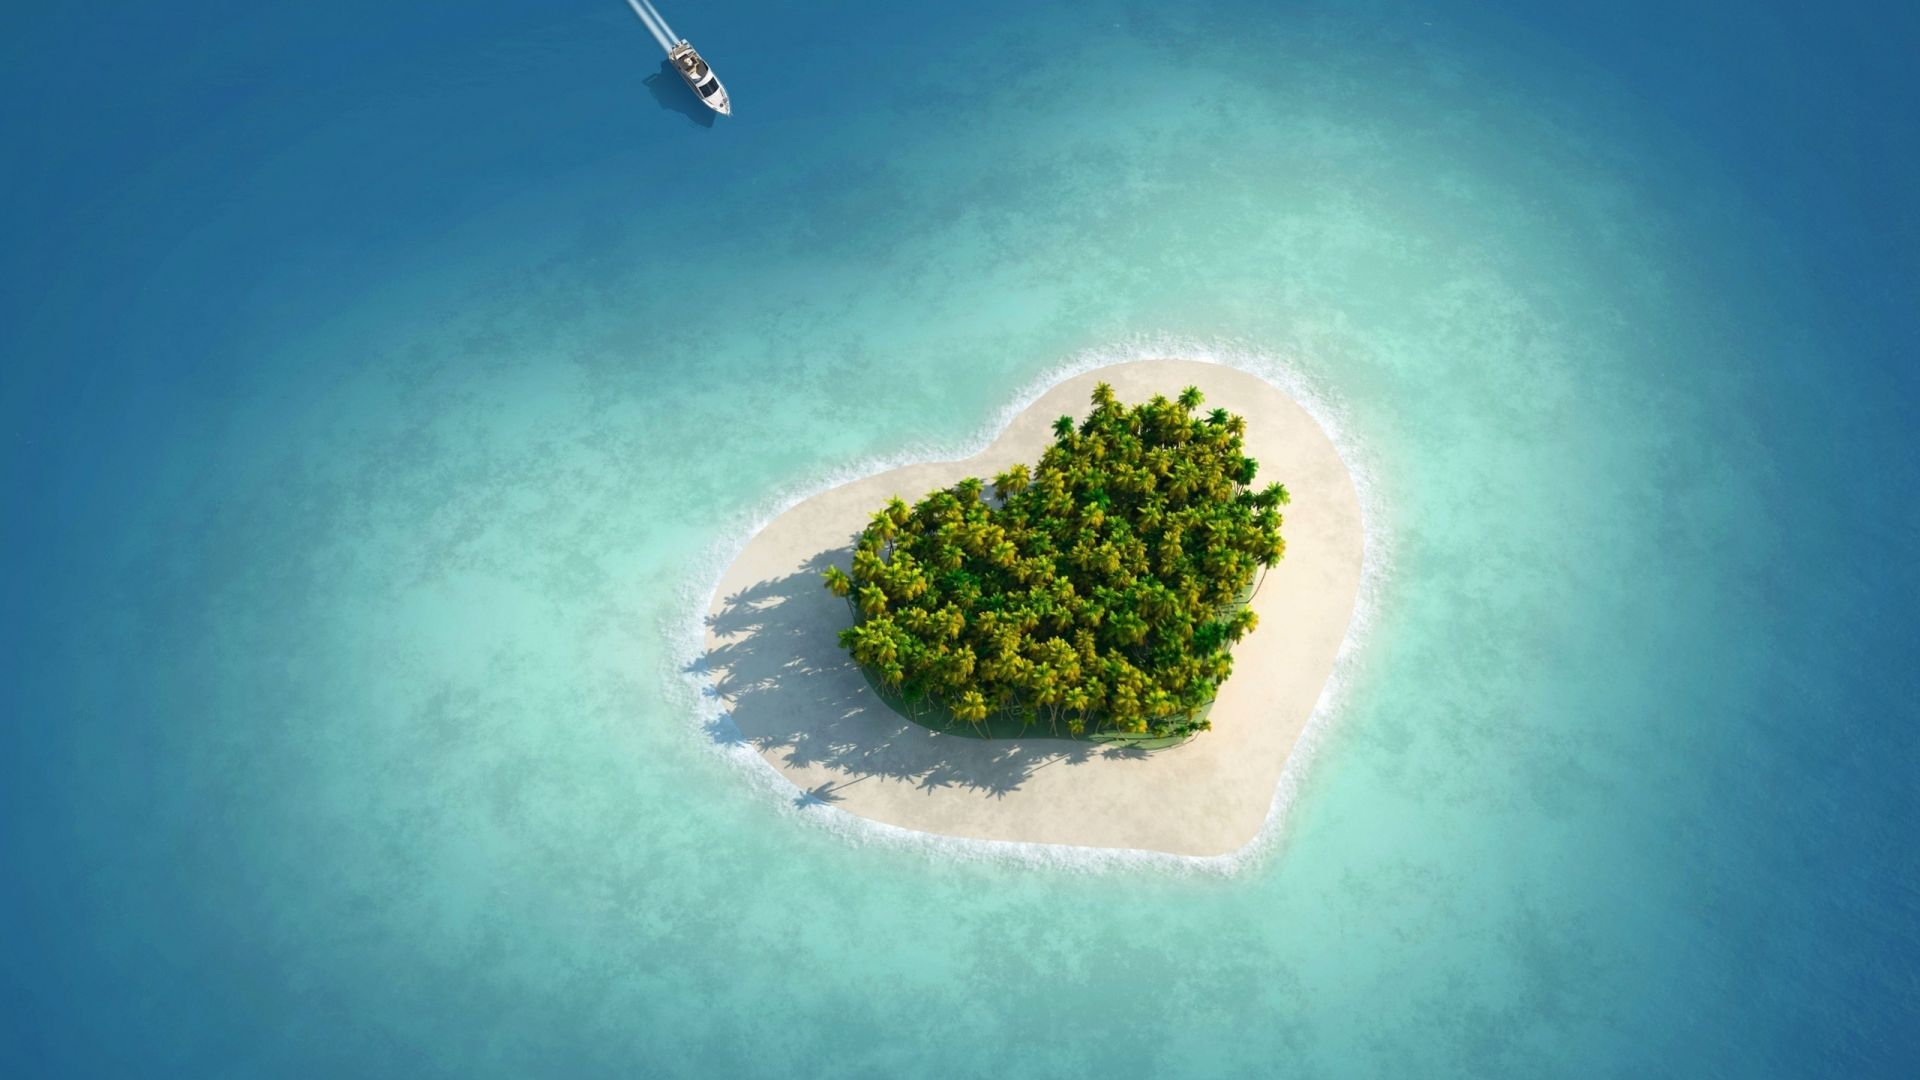 фото любовь, остров, love image, heart, HD, island, ocean (horizontal)